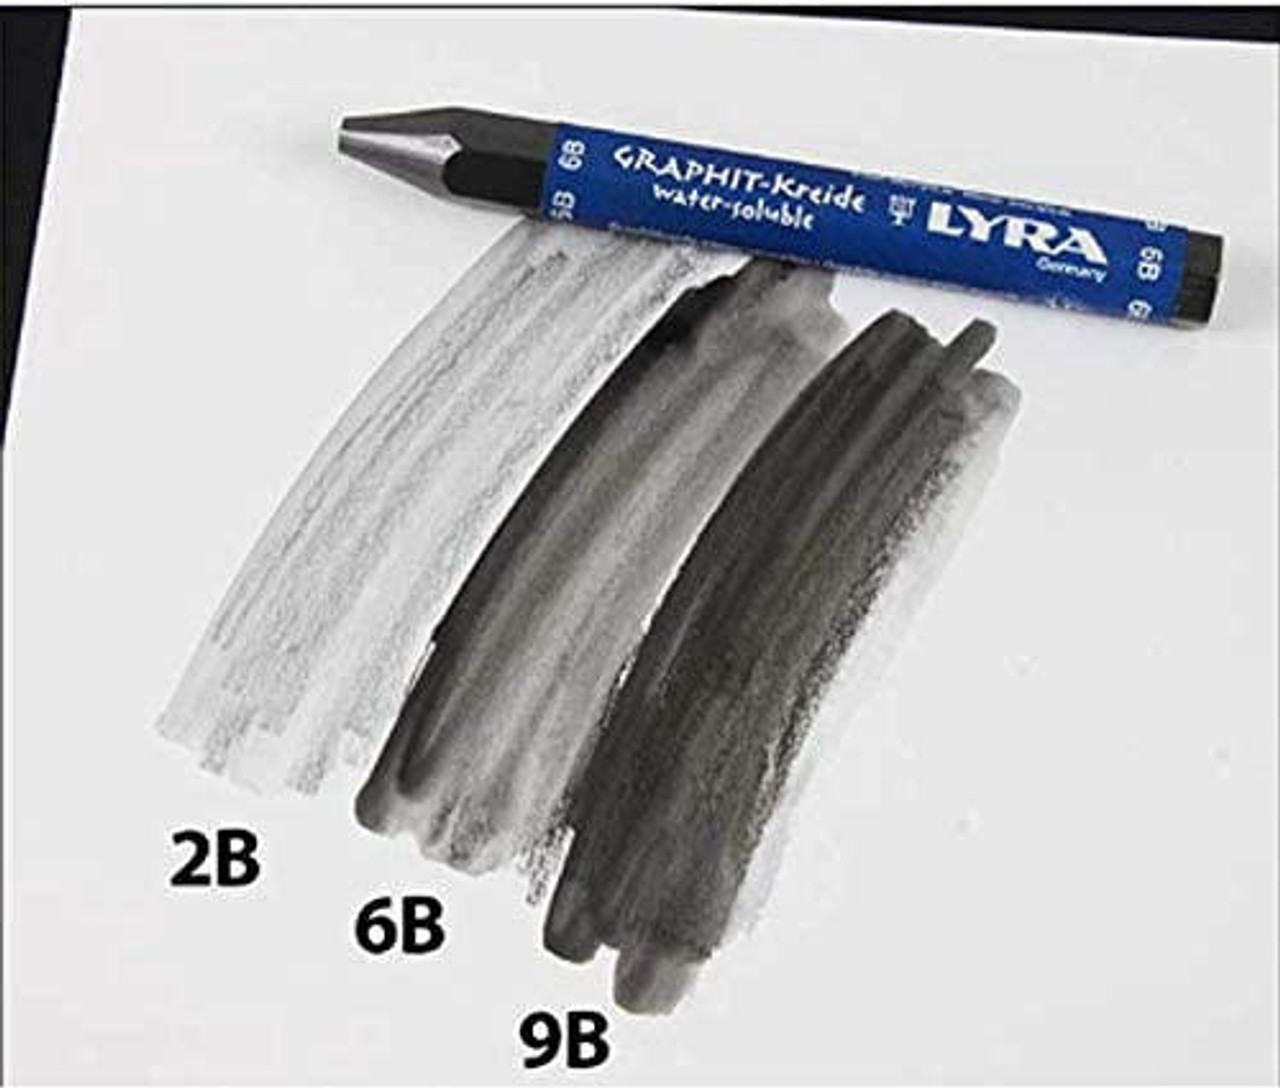 Lyra Water-Soluble Graphite Crayon 6B - Philadelphia Museum Of Art